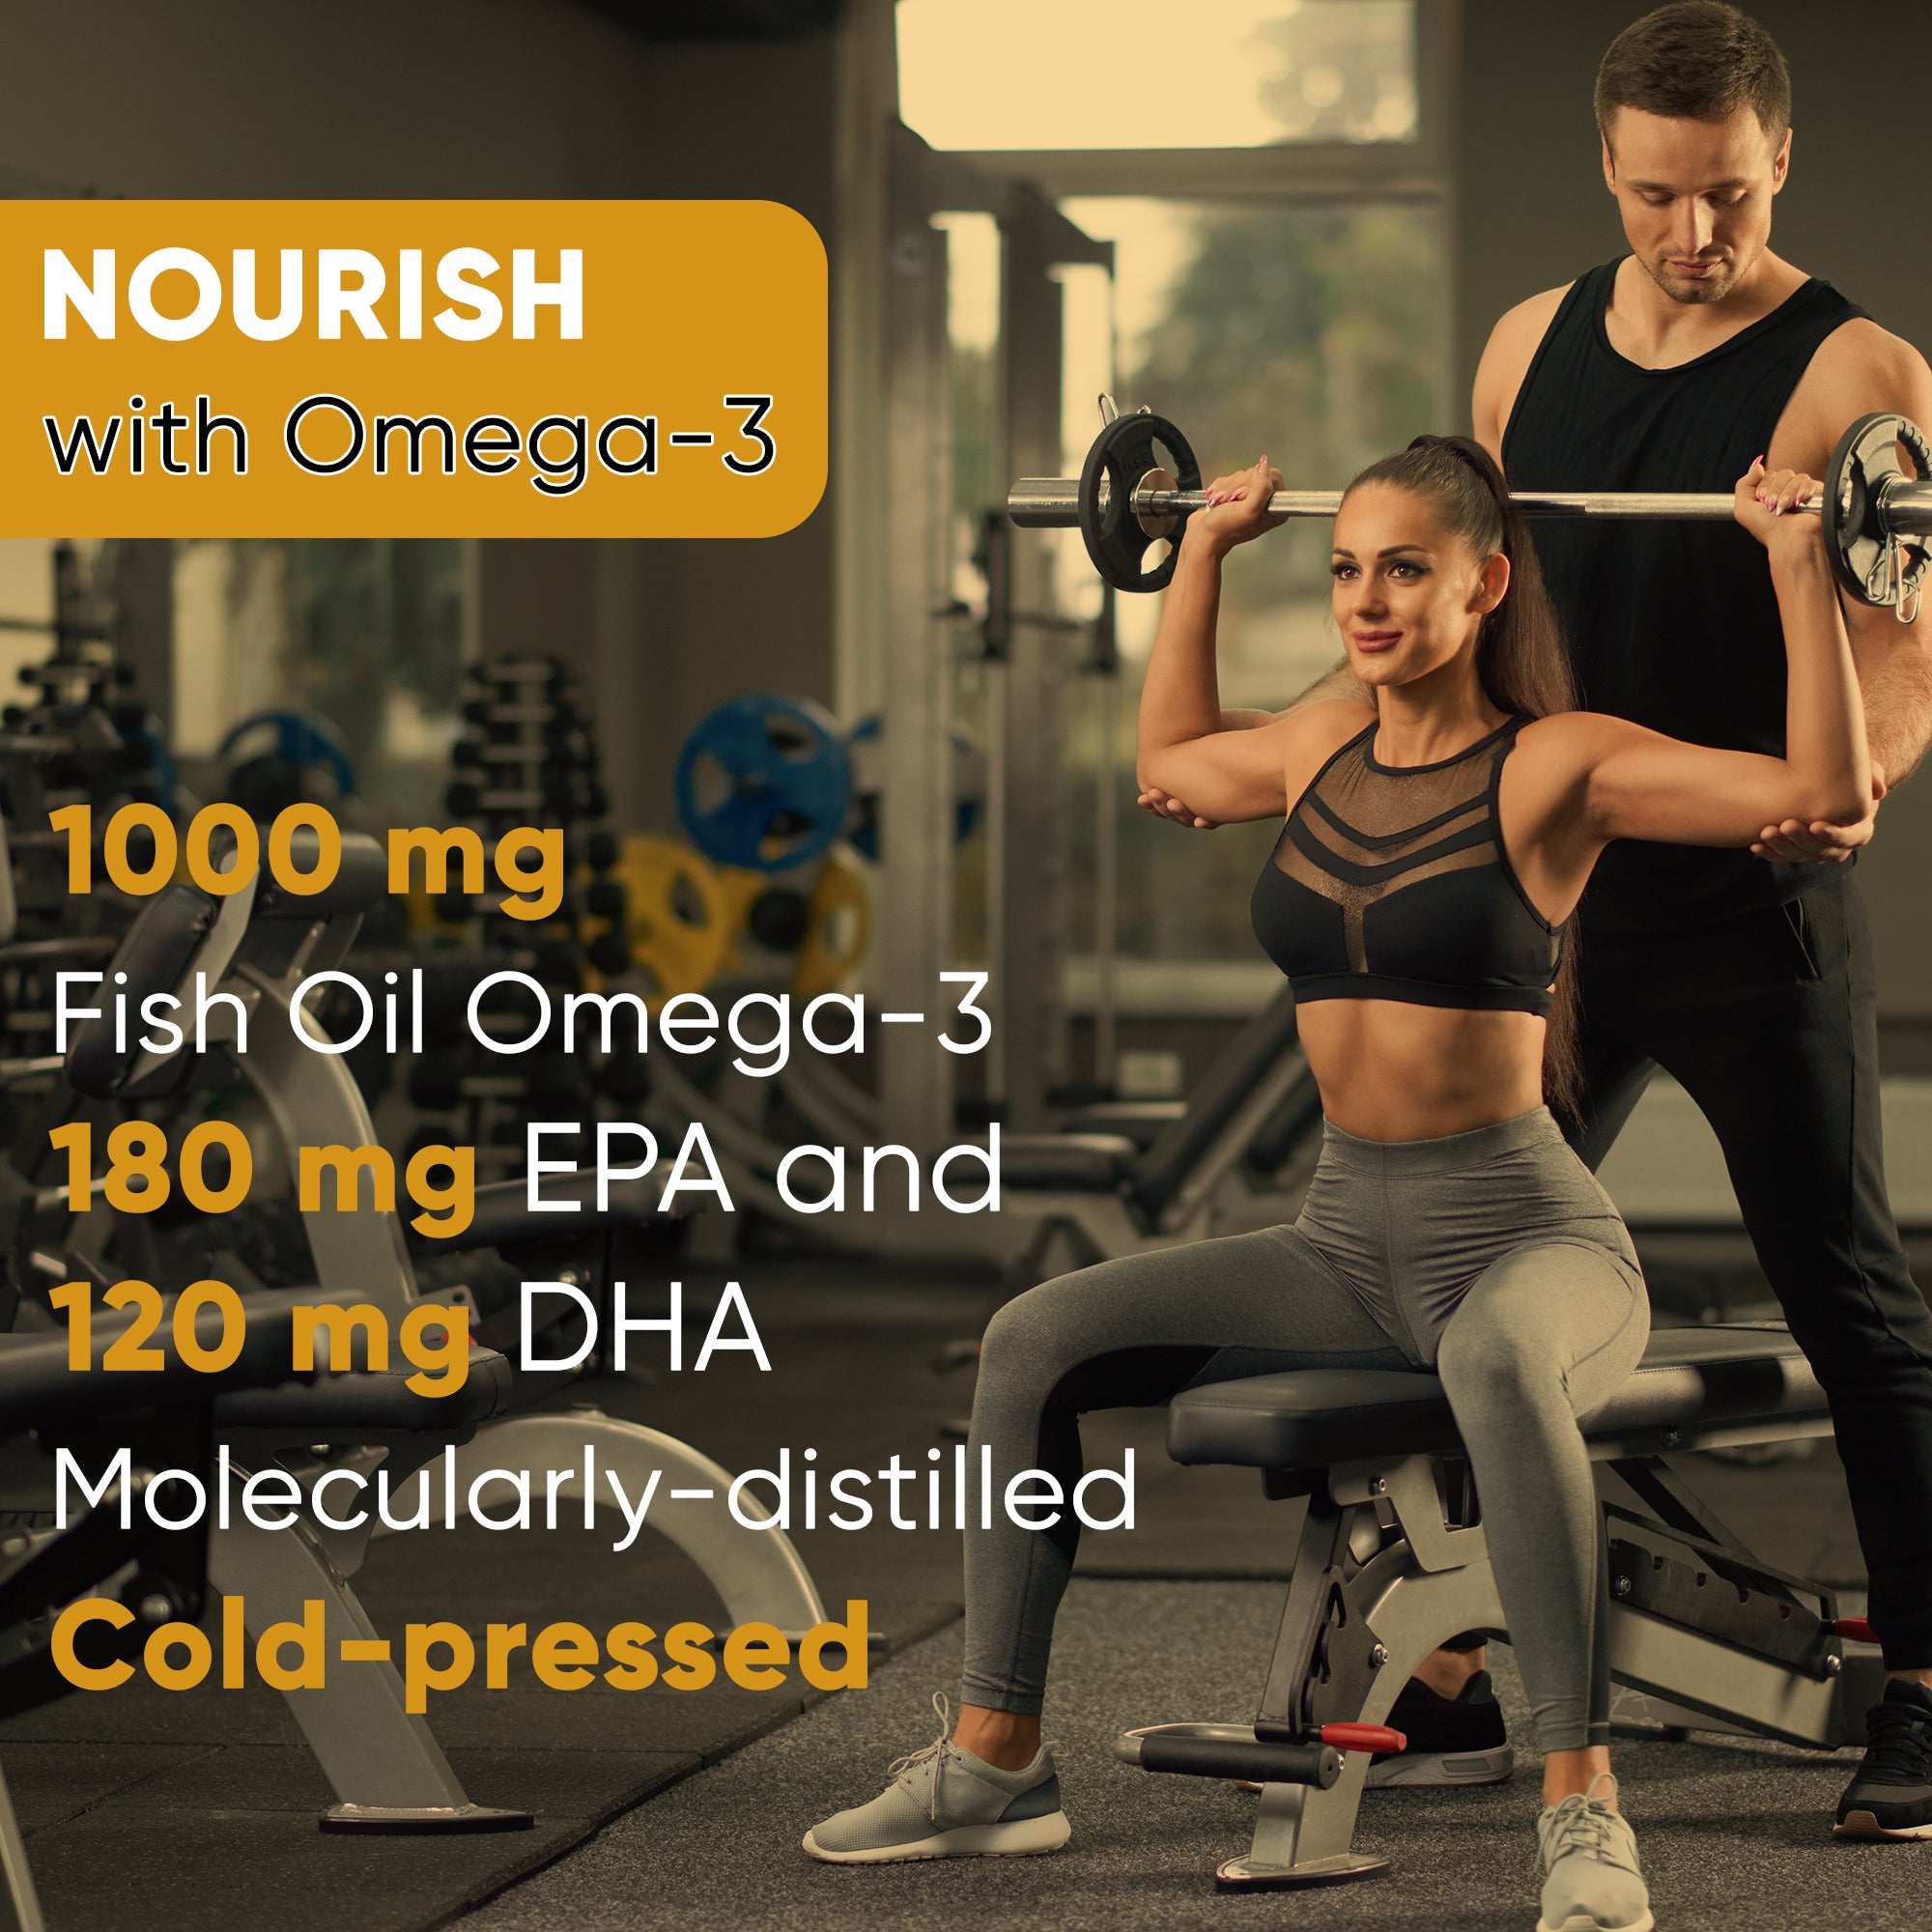 Denzour Omega-3 Fish Oil - 100 Capsules